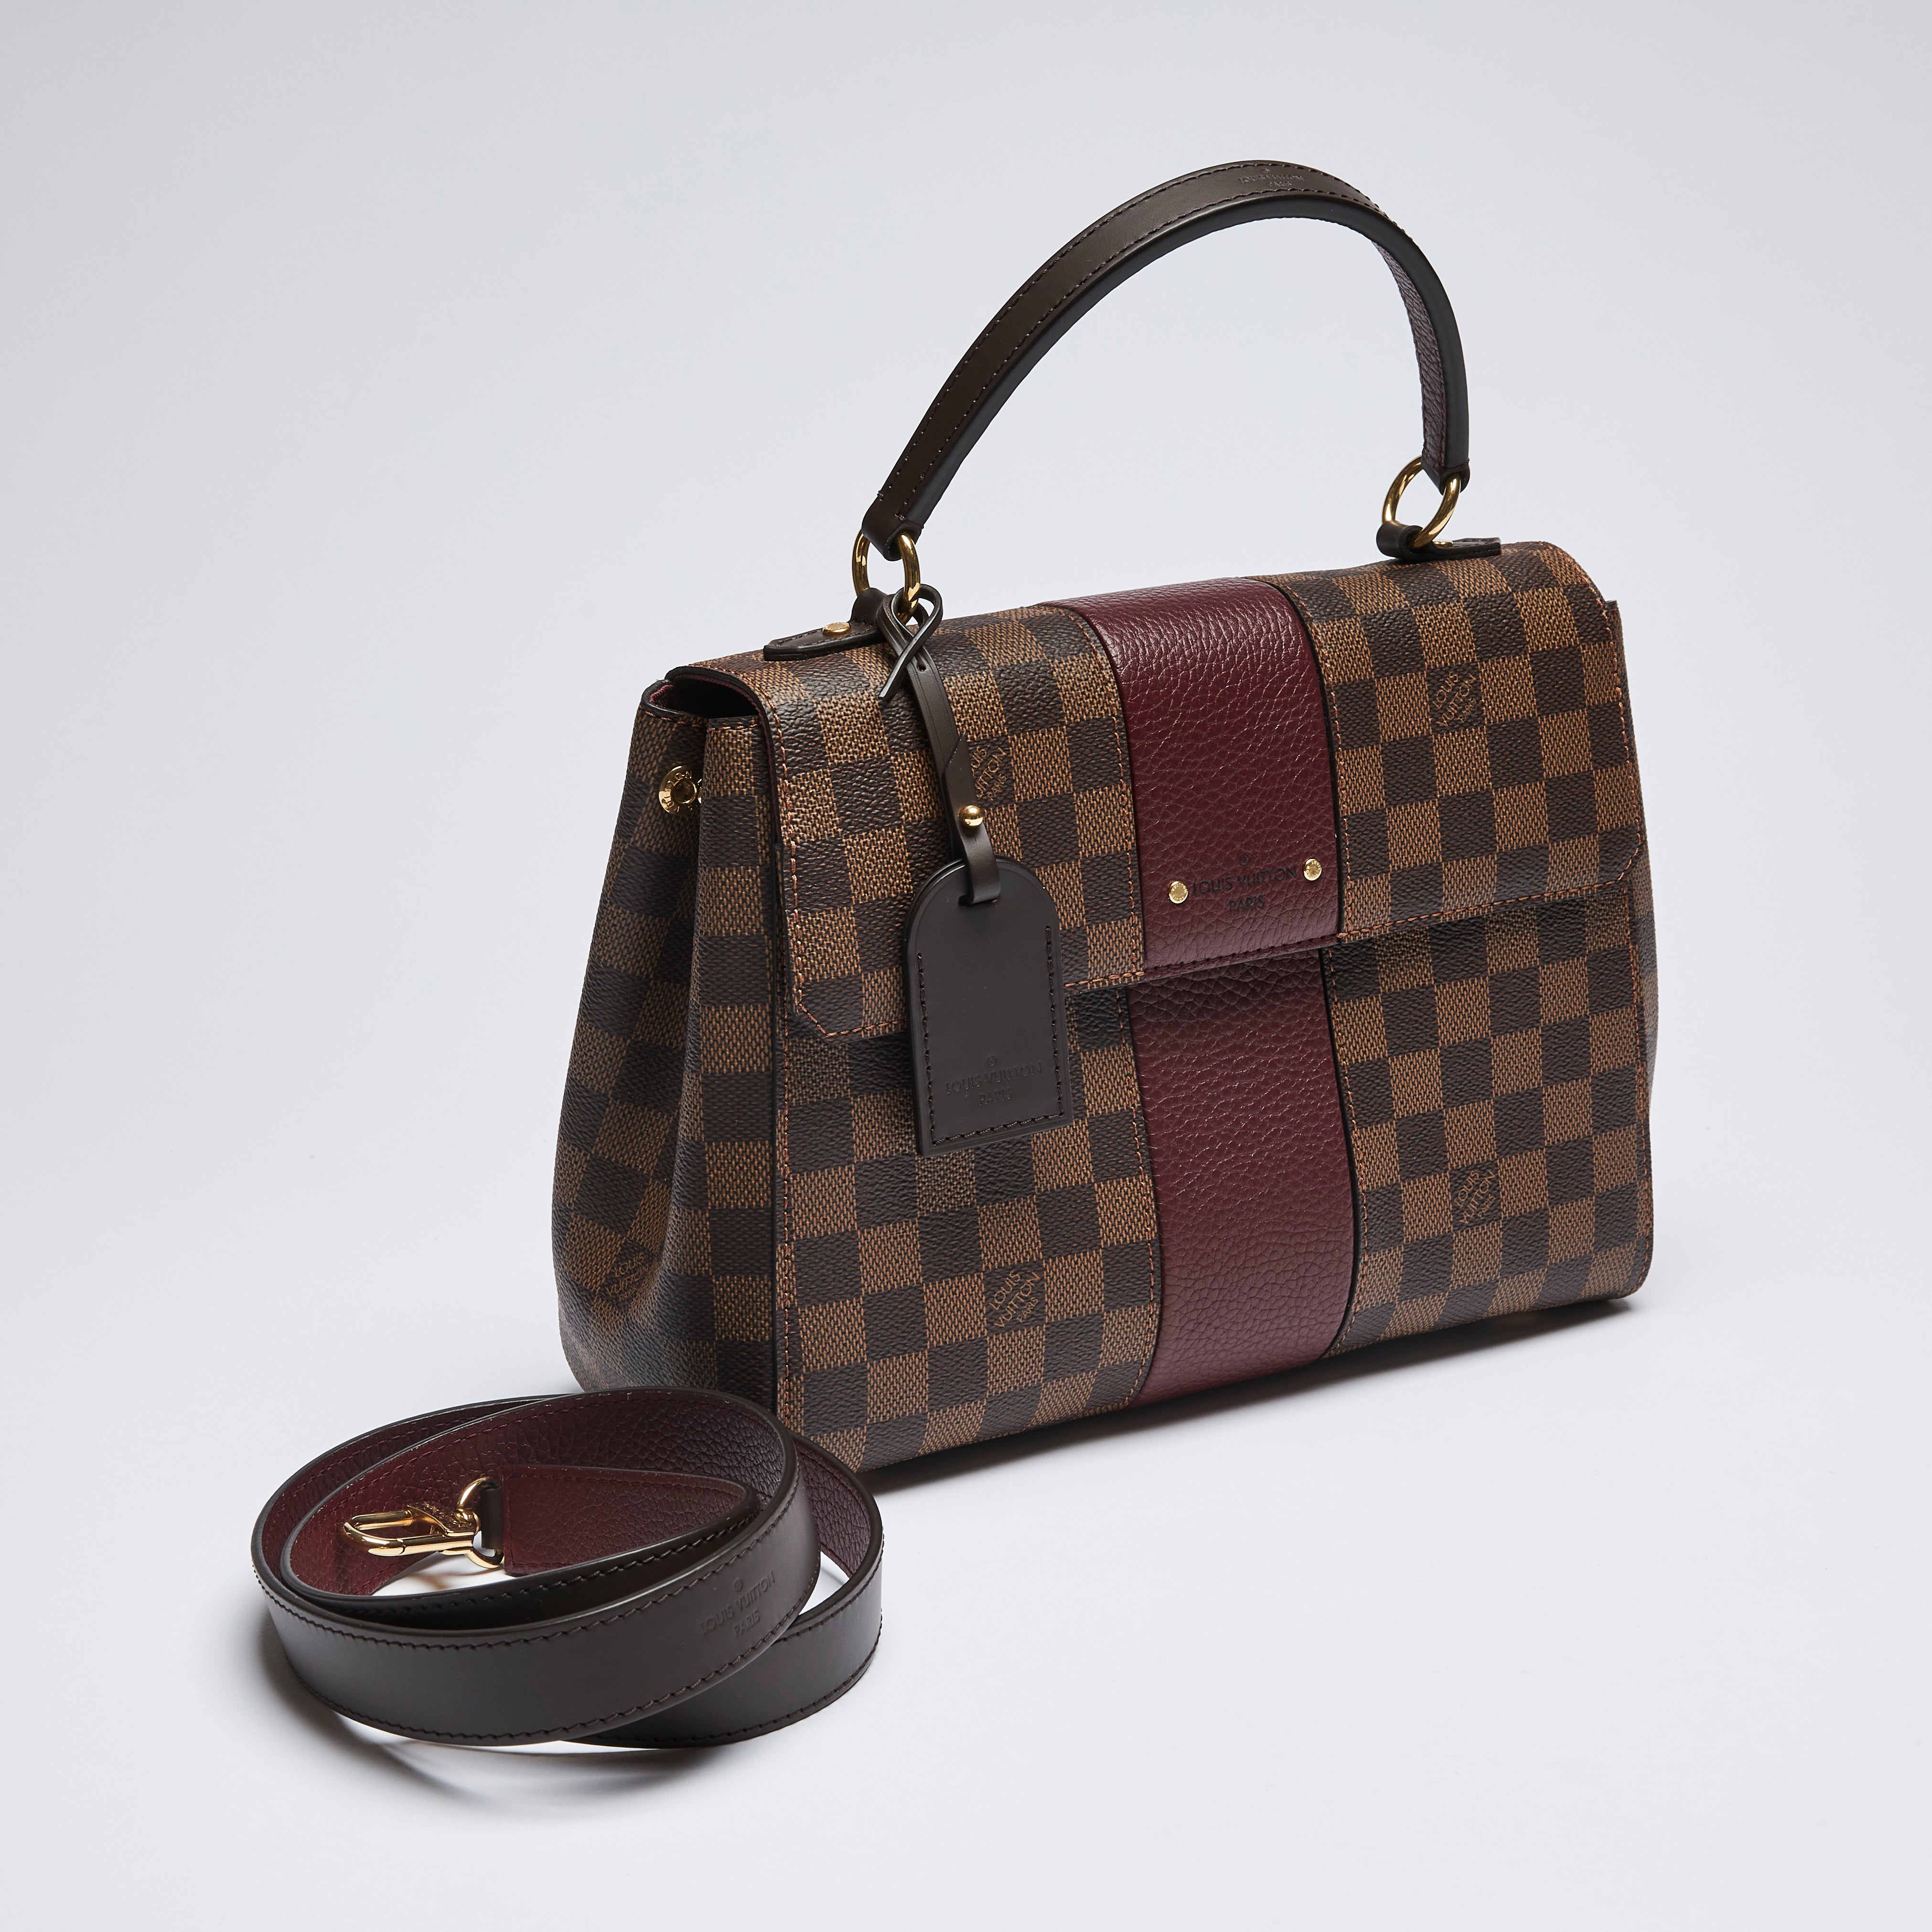 Louis Vuitton Pre-Loved Bond Street bag for Women - Brown in